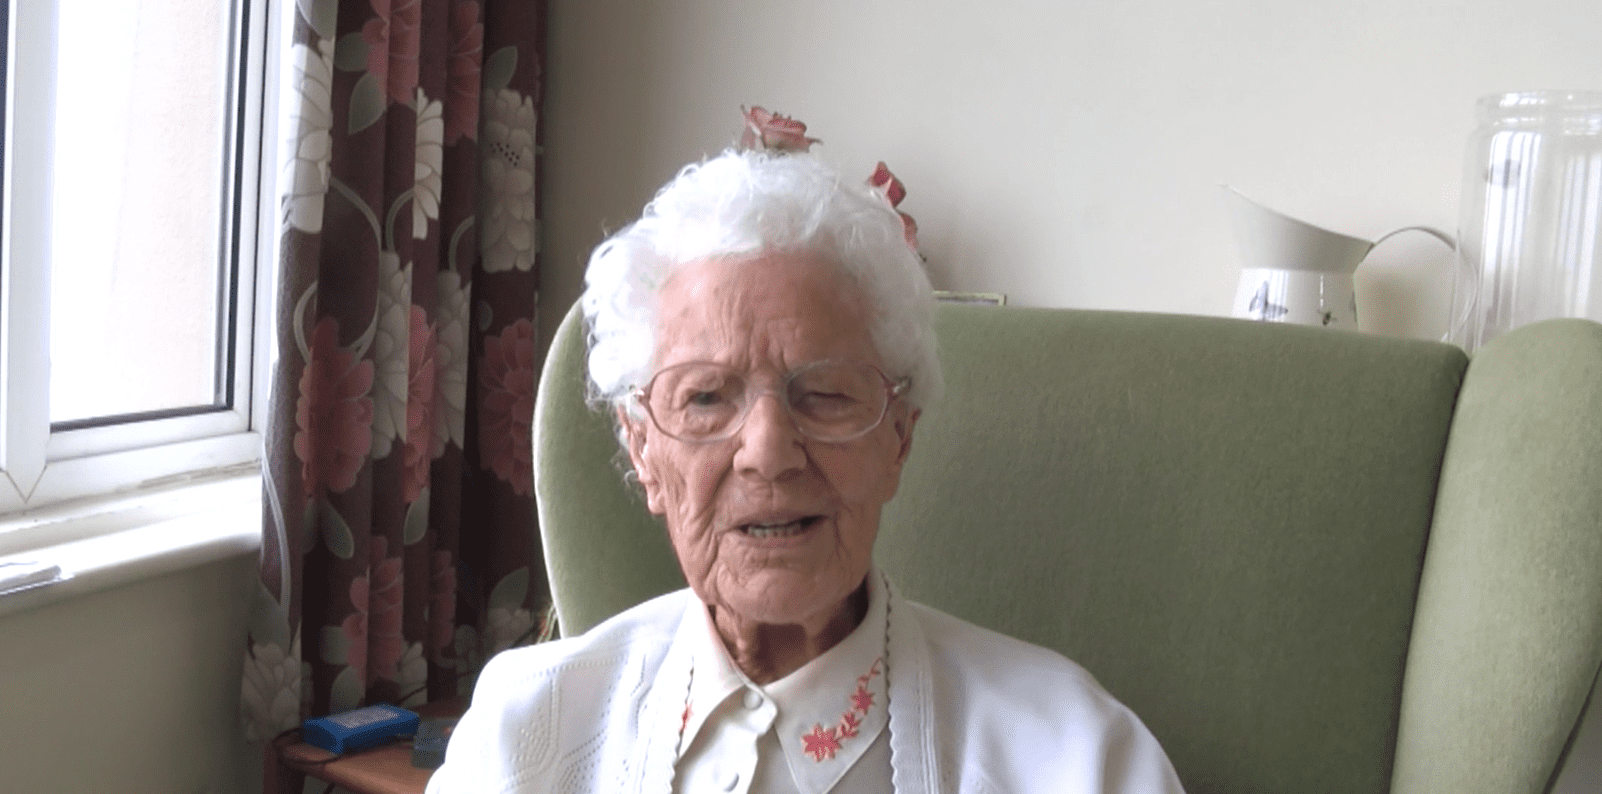 110-year-old May Willis talking. | Source: BBC News